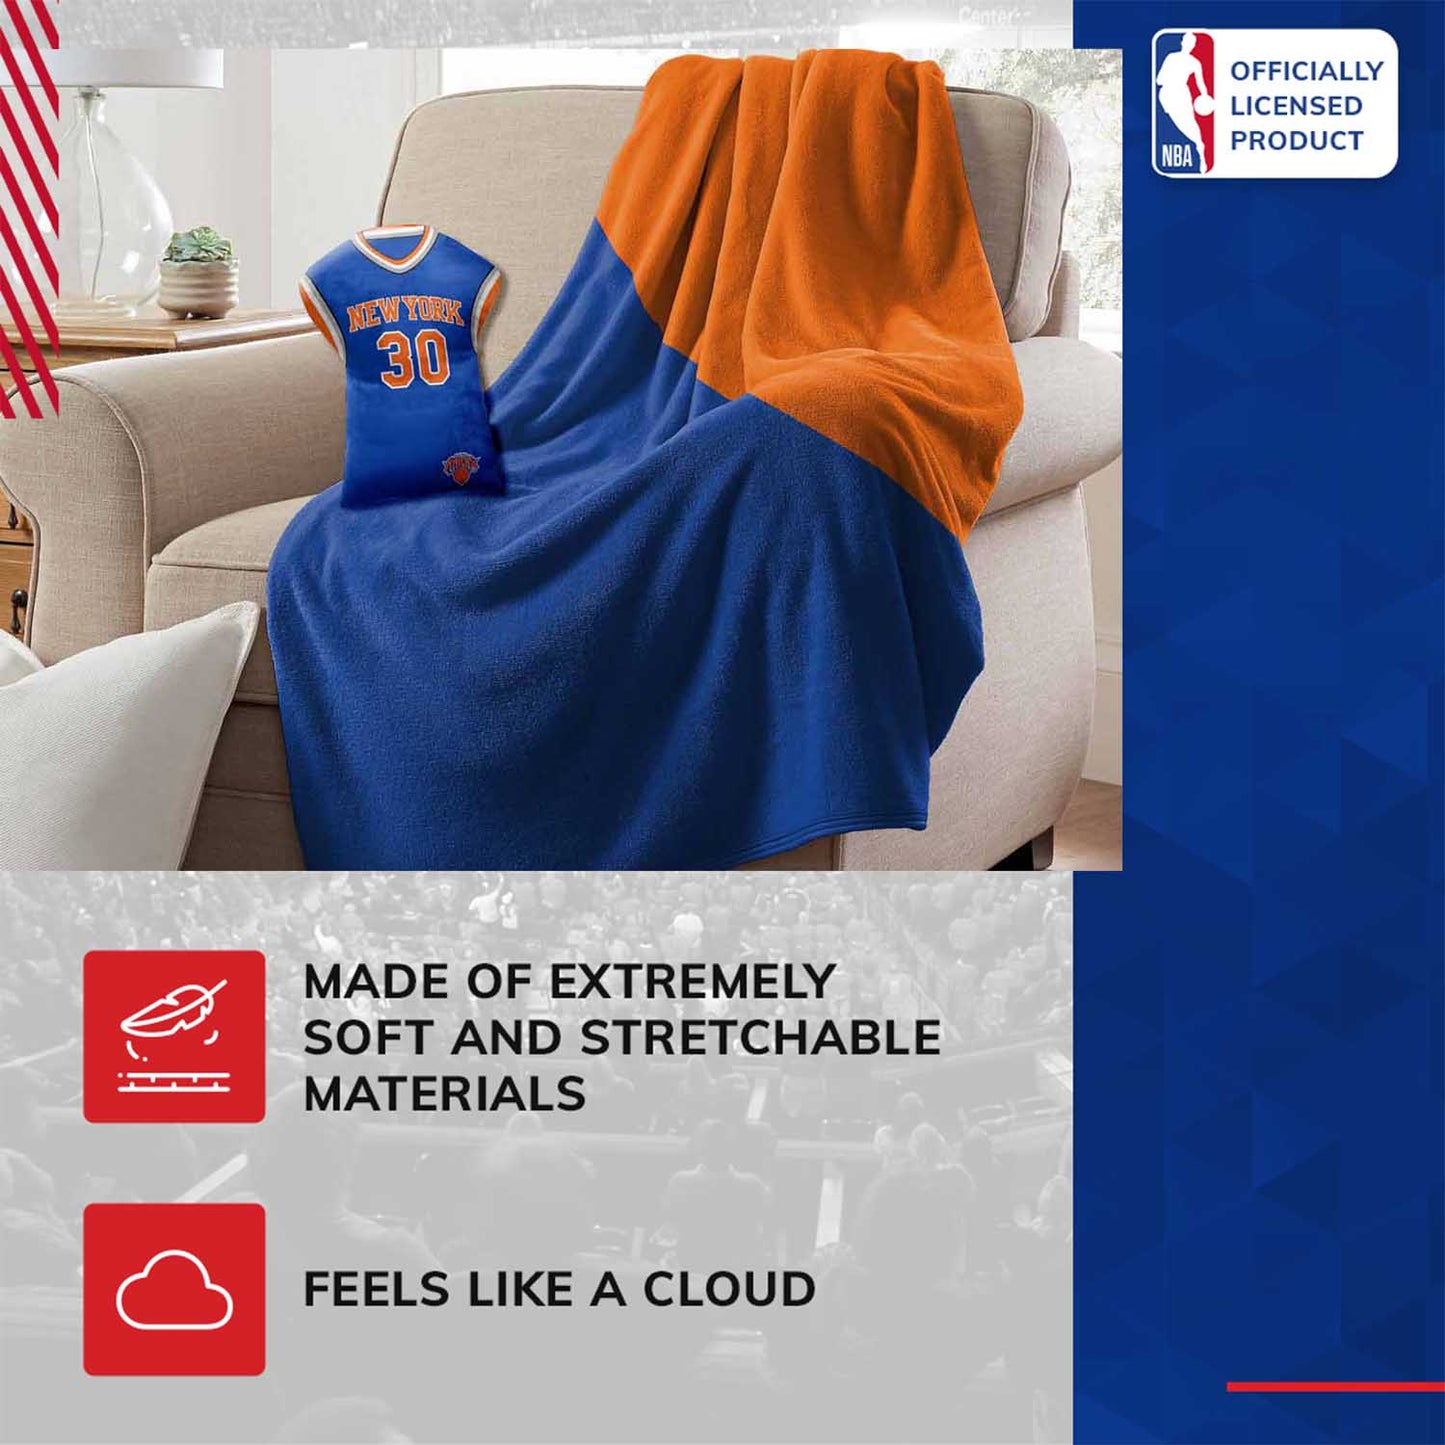 New York Knicks NBA Travel Julius Randle Jersey Cloud Pillow Bedding Accessories - Royal